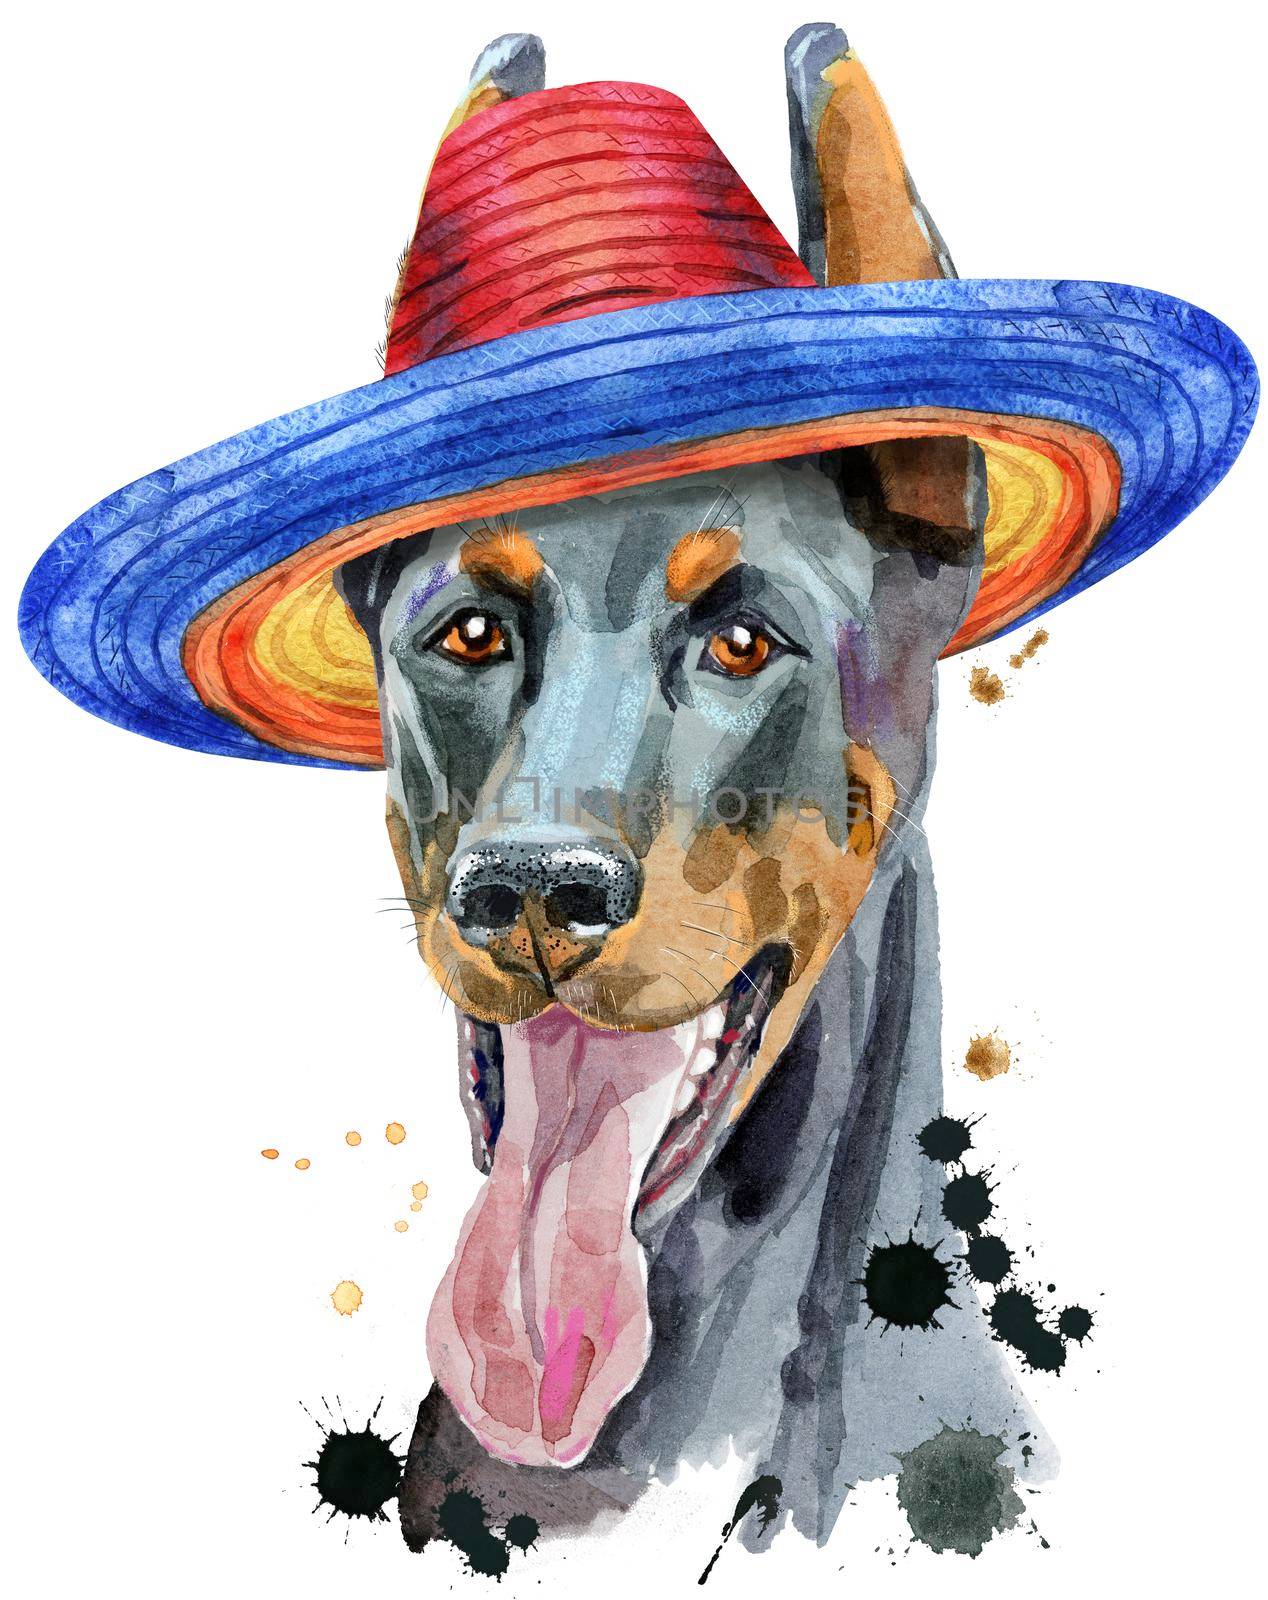 Cute Dog in sombrero. Dog T-shirt graphics. watercolor doberman illustration